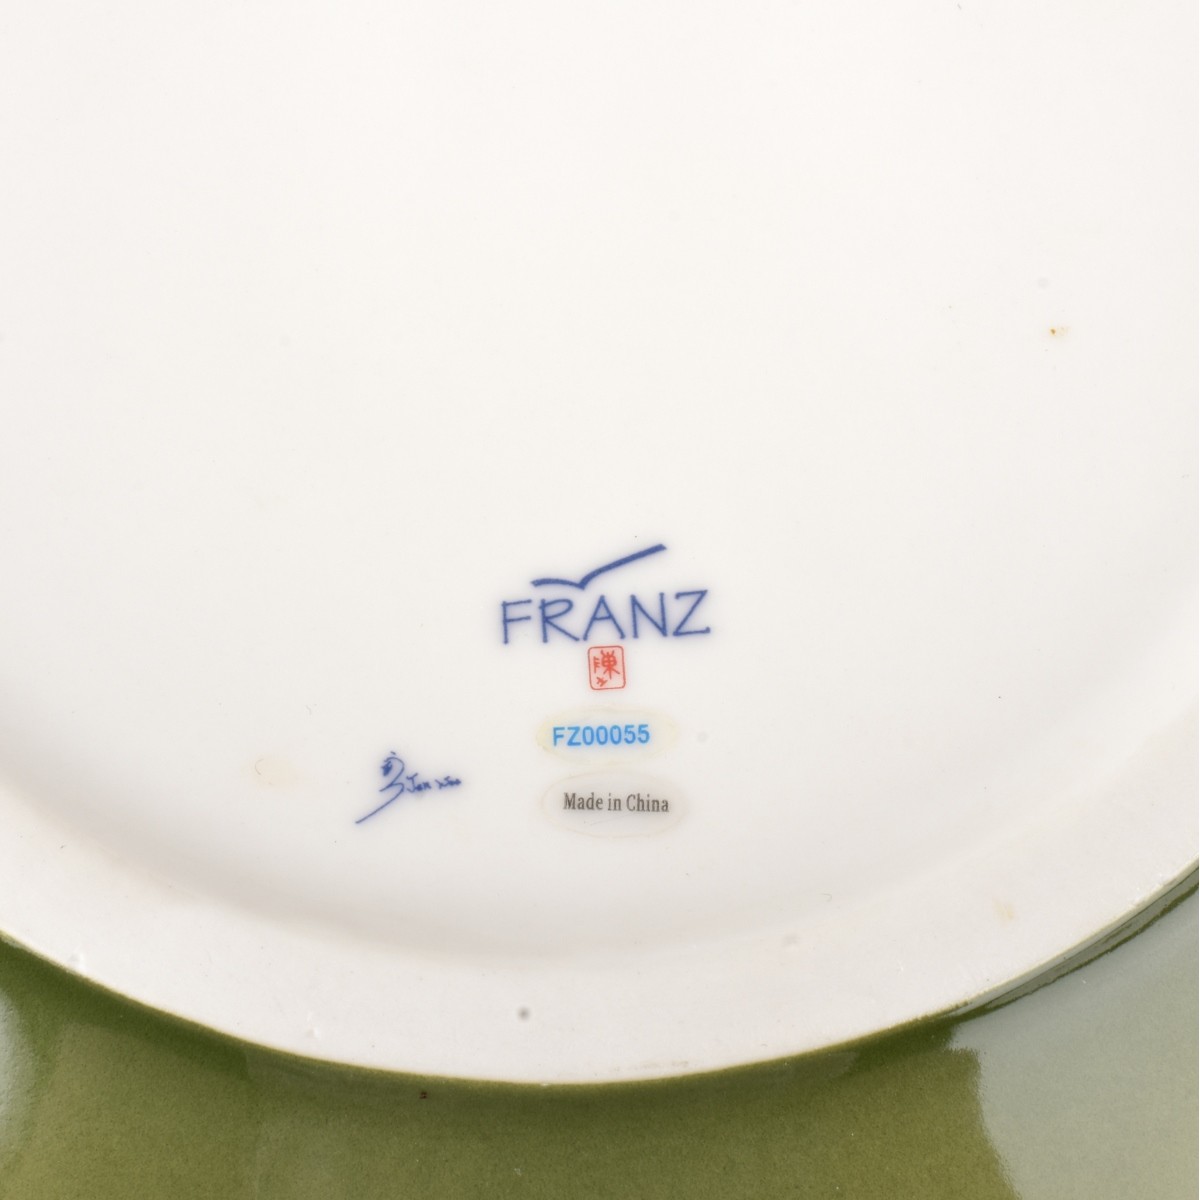 Porcelain Tableware